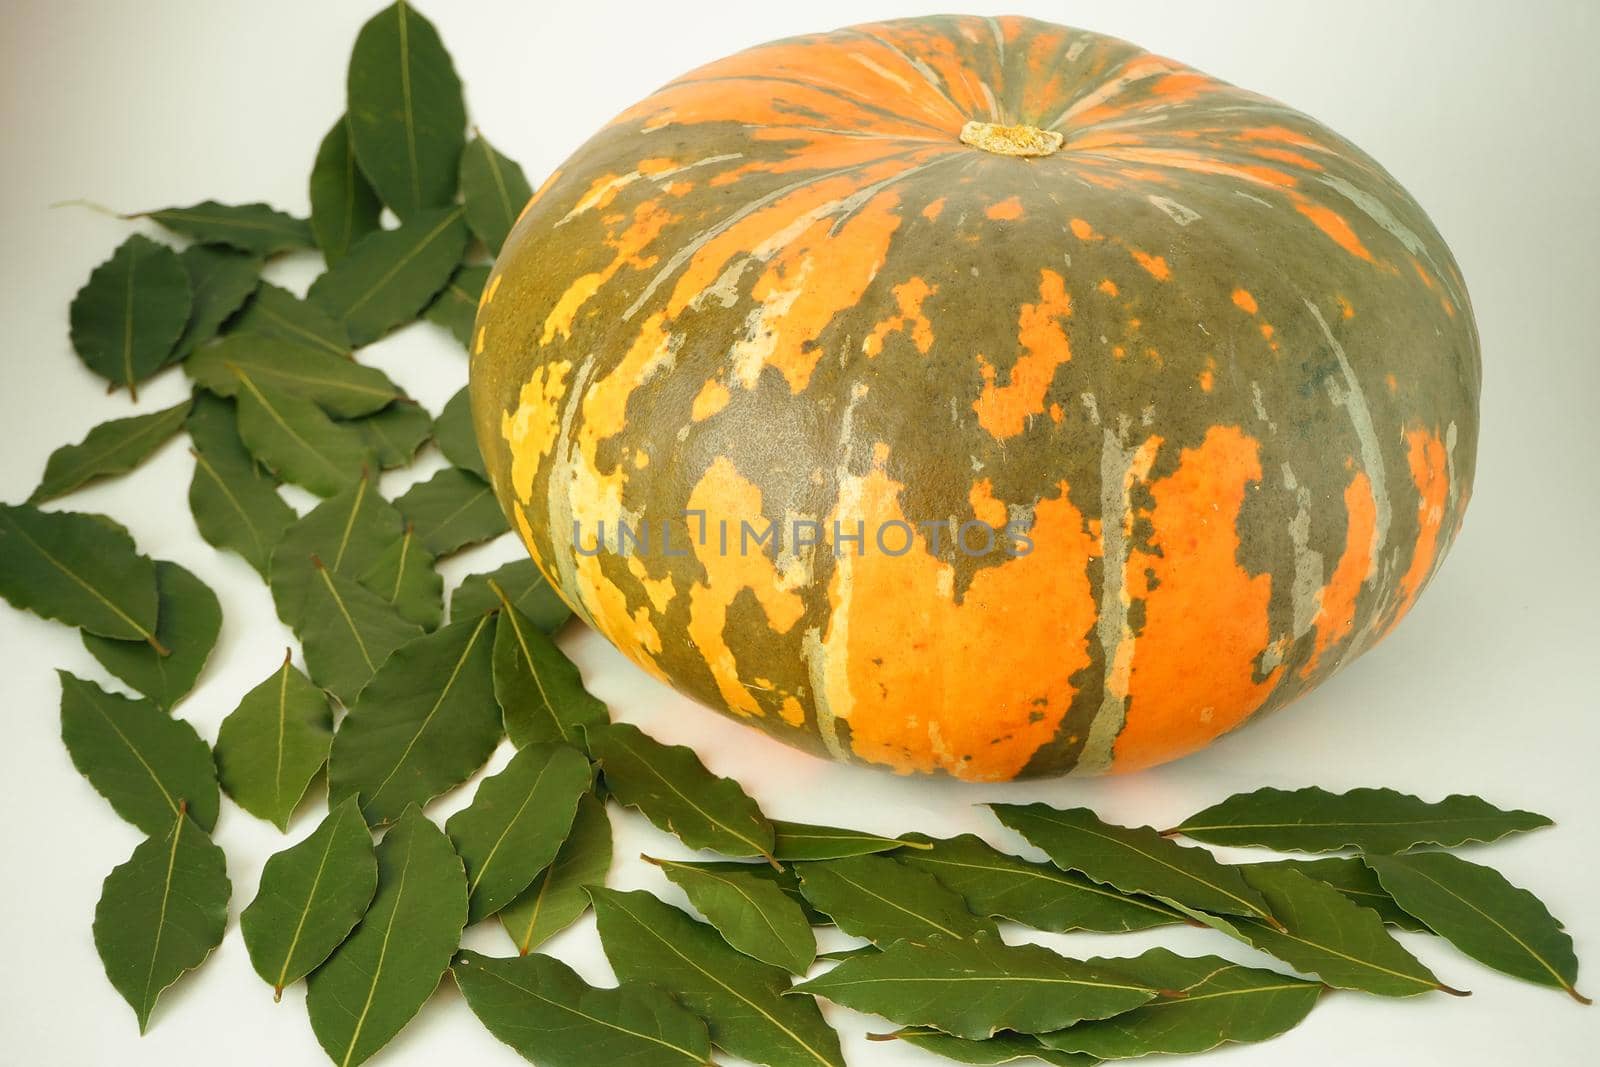 Ripe orange pumpkin and green ripe zucchini on a white background. by Olga26